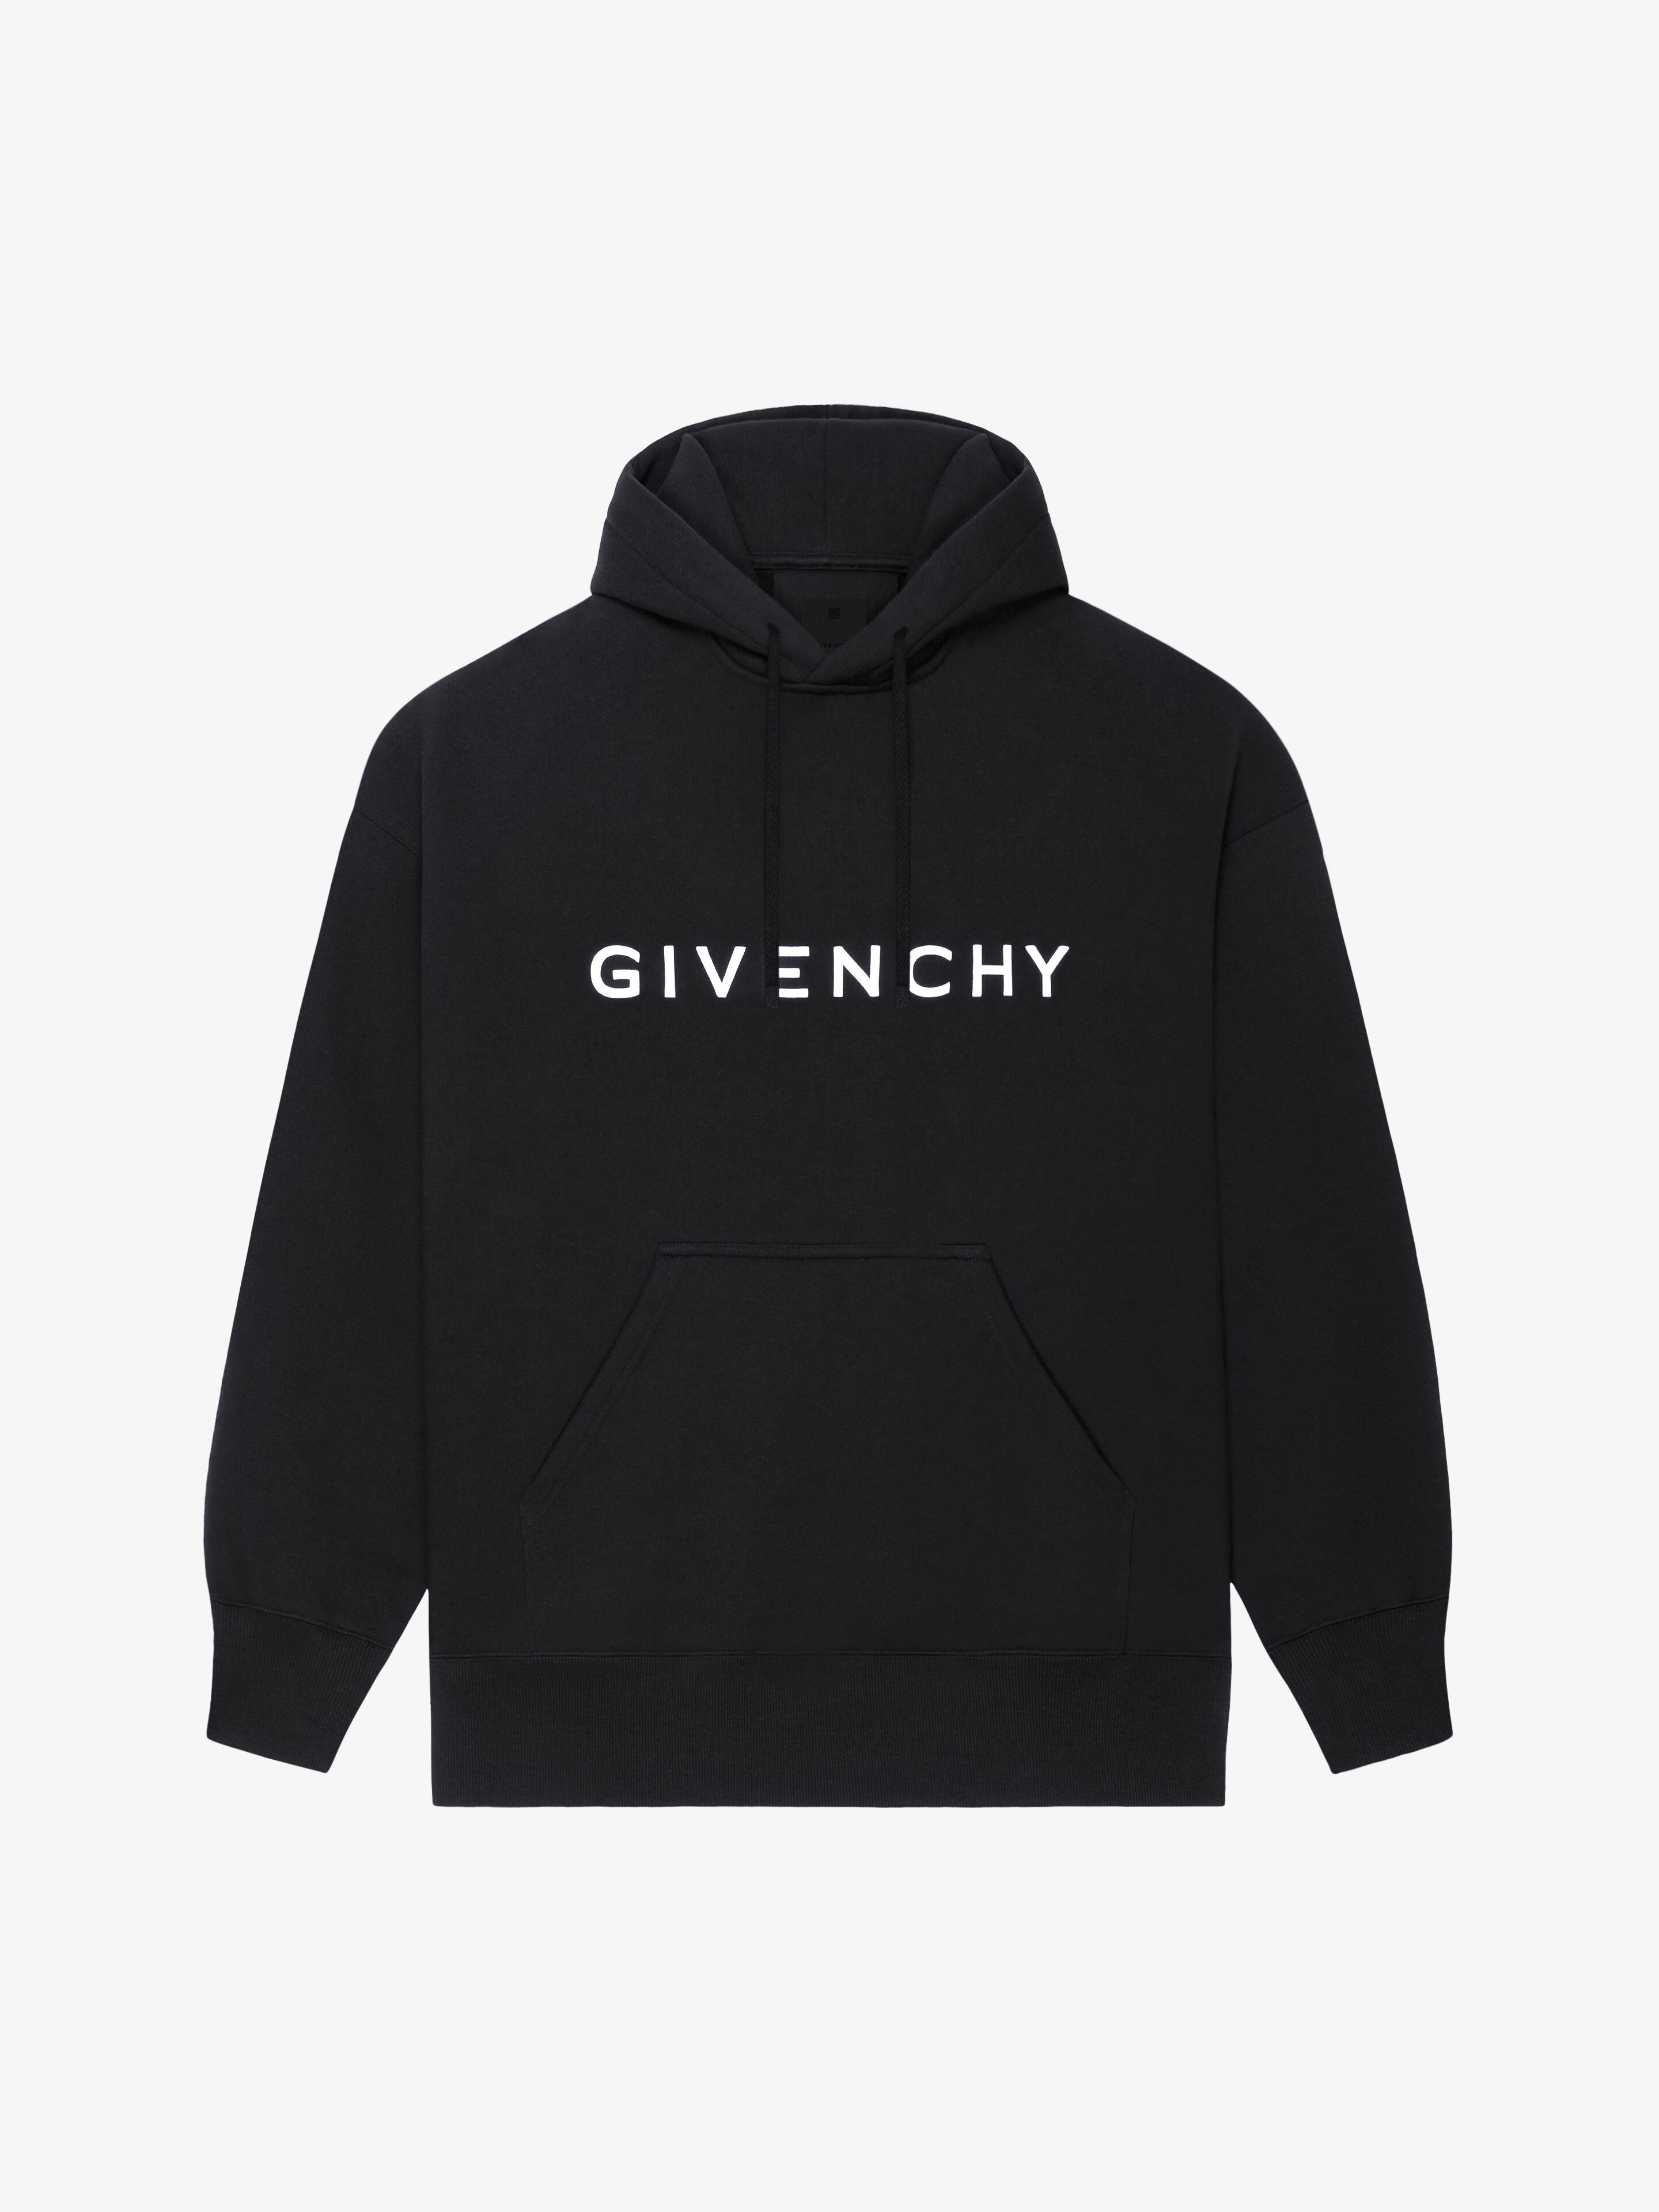 Givenchy sweater unisex